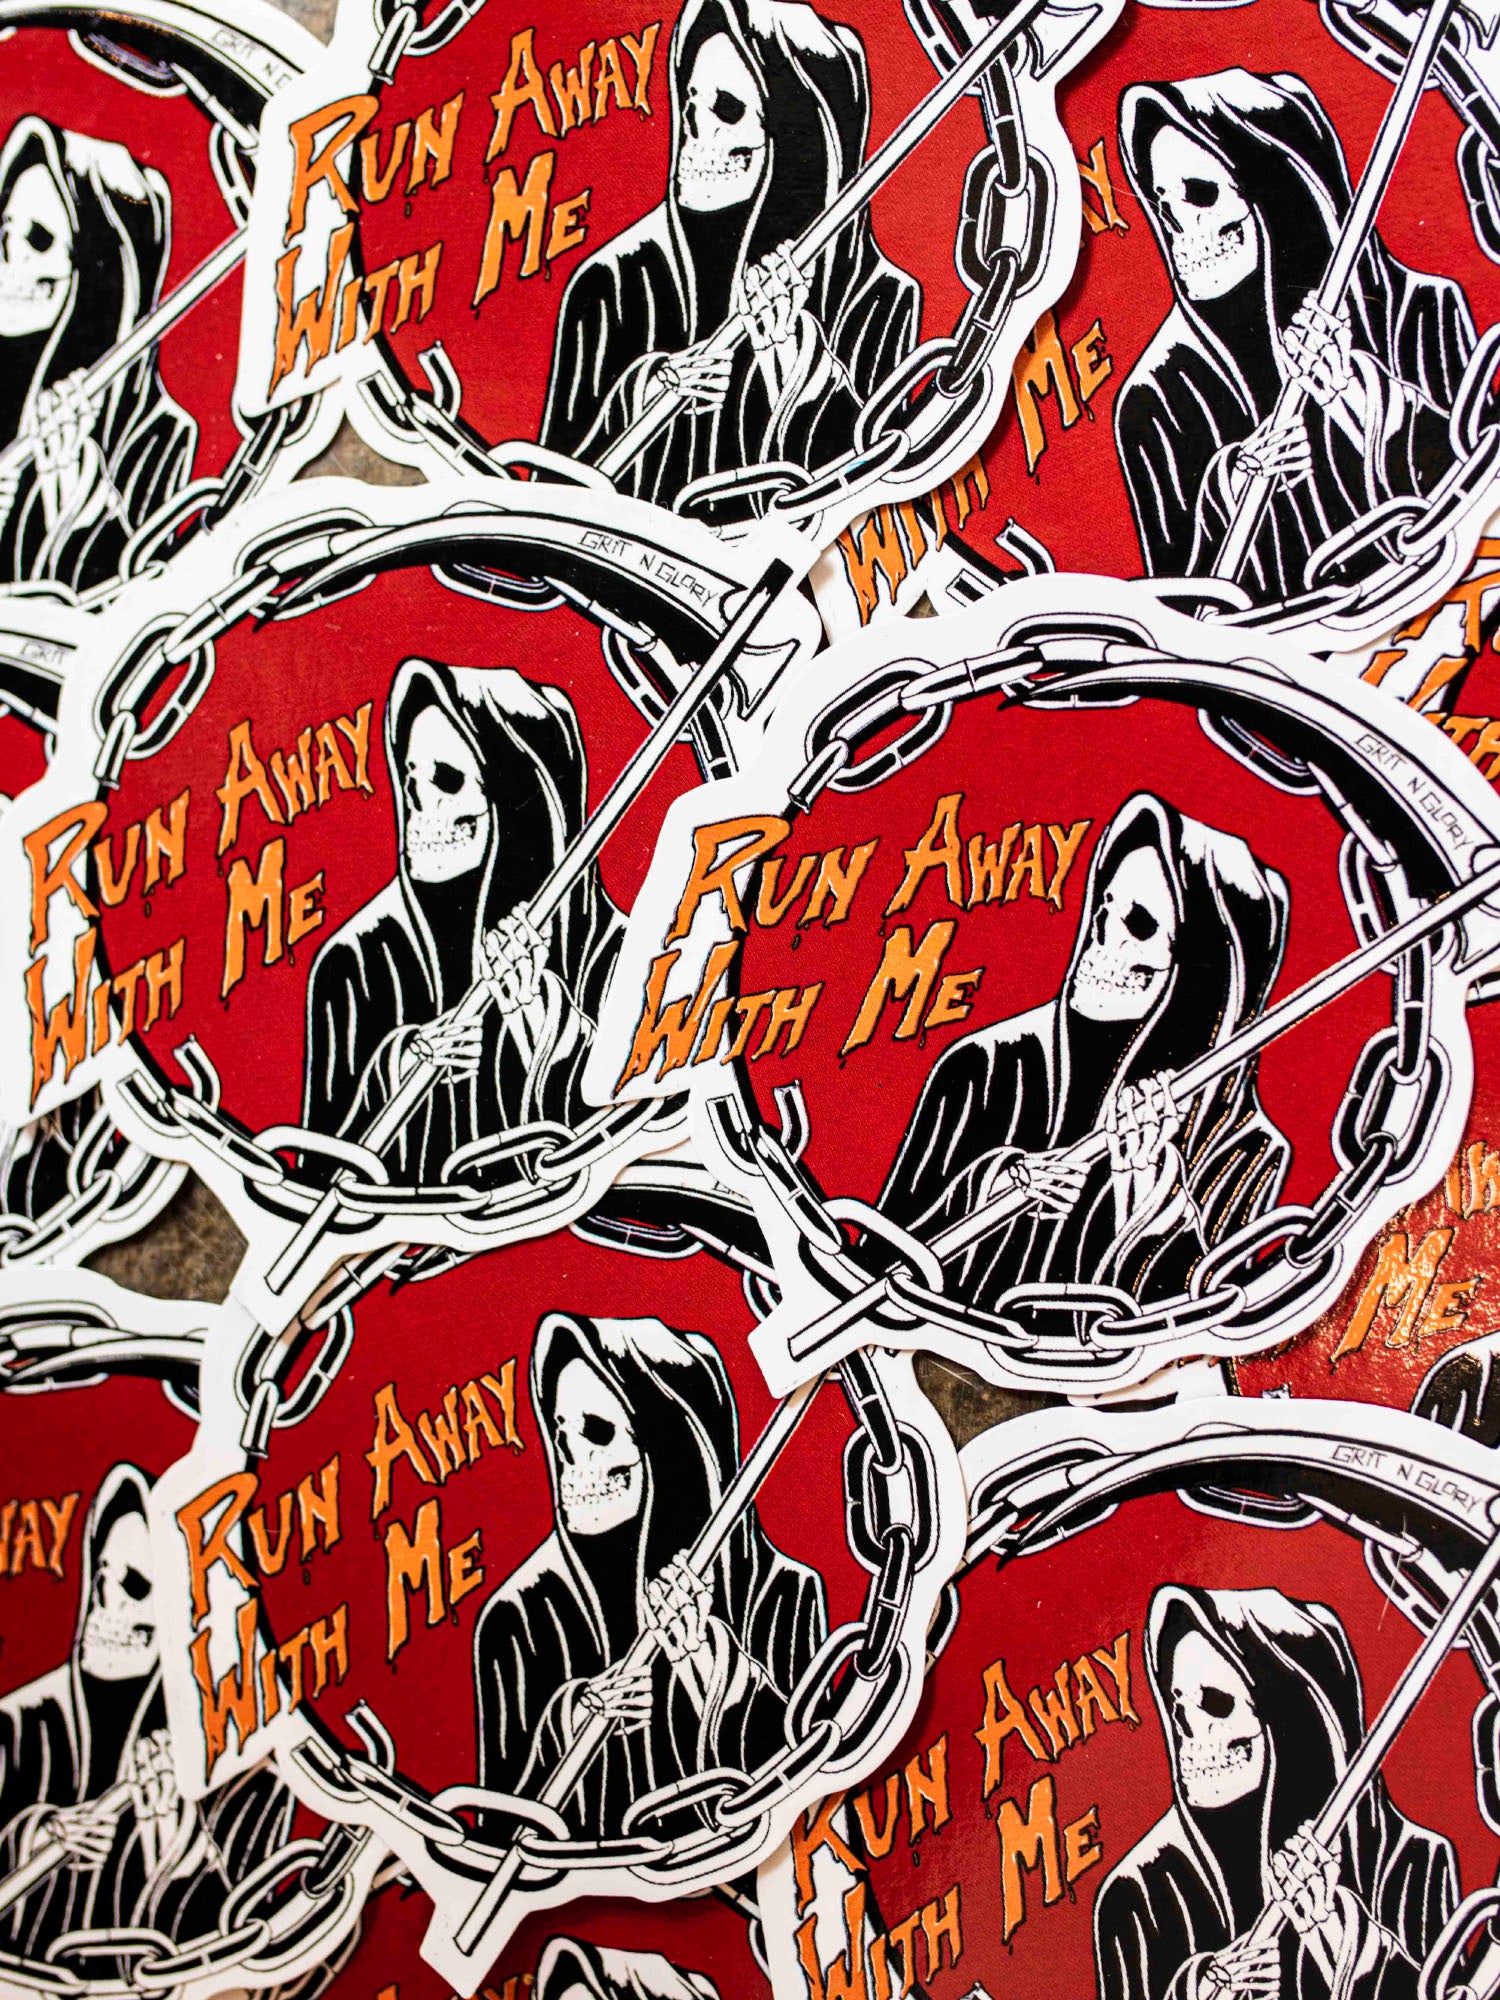 Runaway Reaper Vinyl Sticker